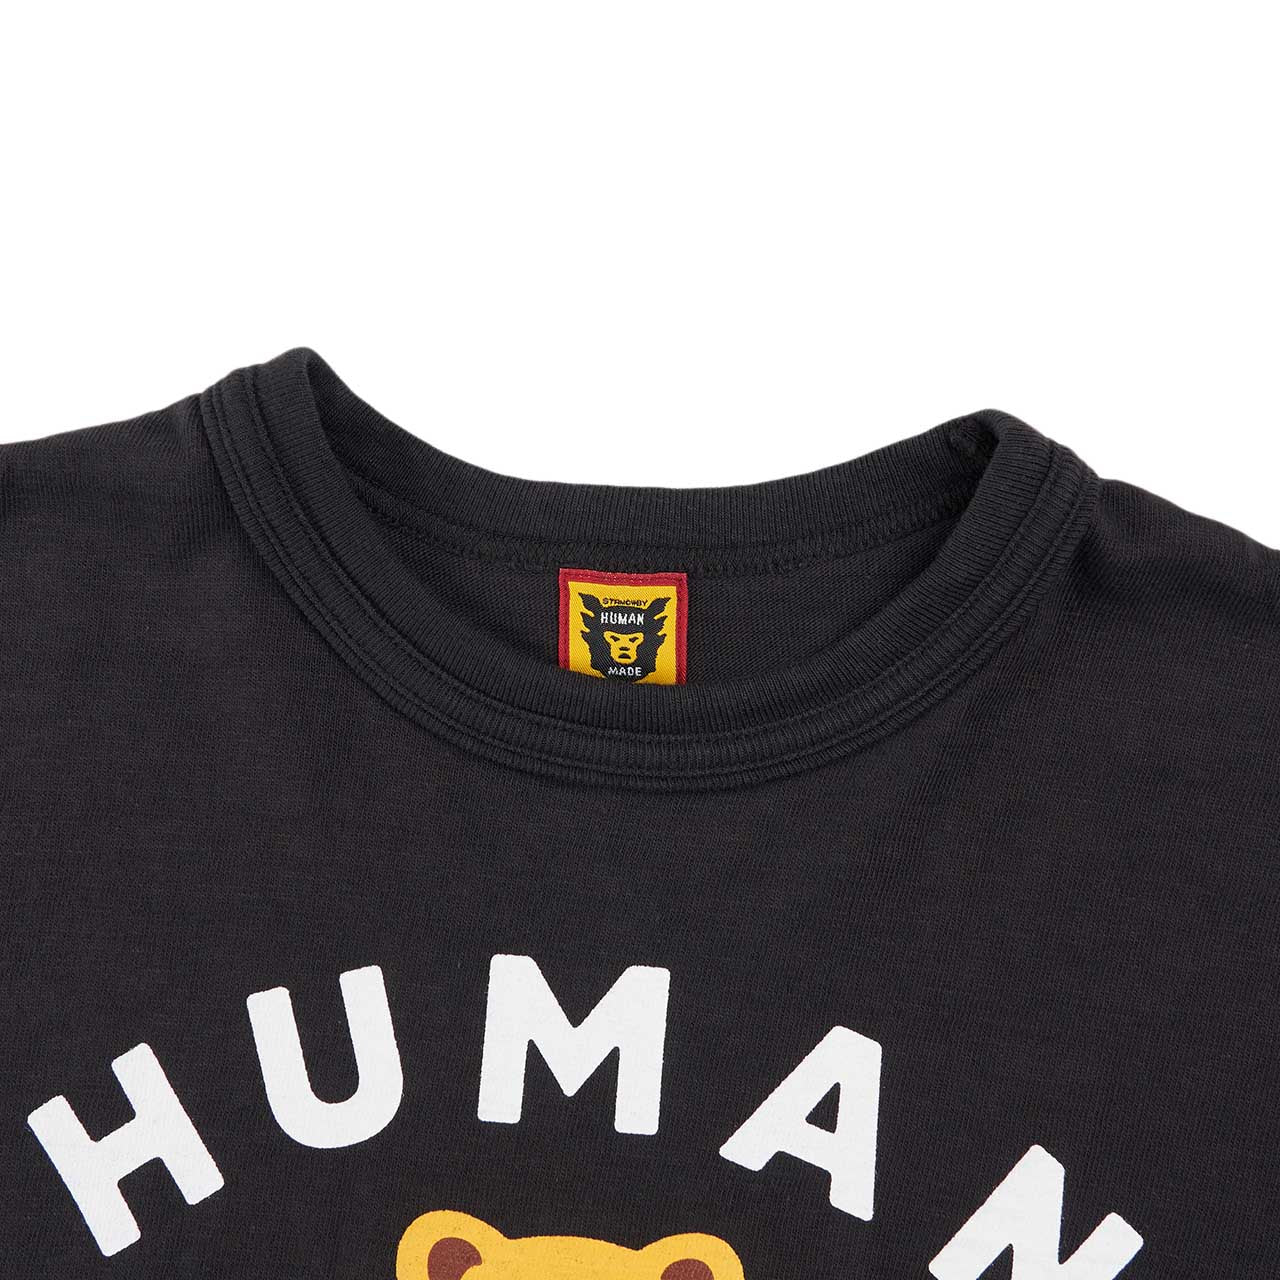 human made graphic t-shirt #13 (black)